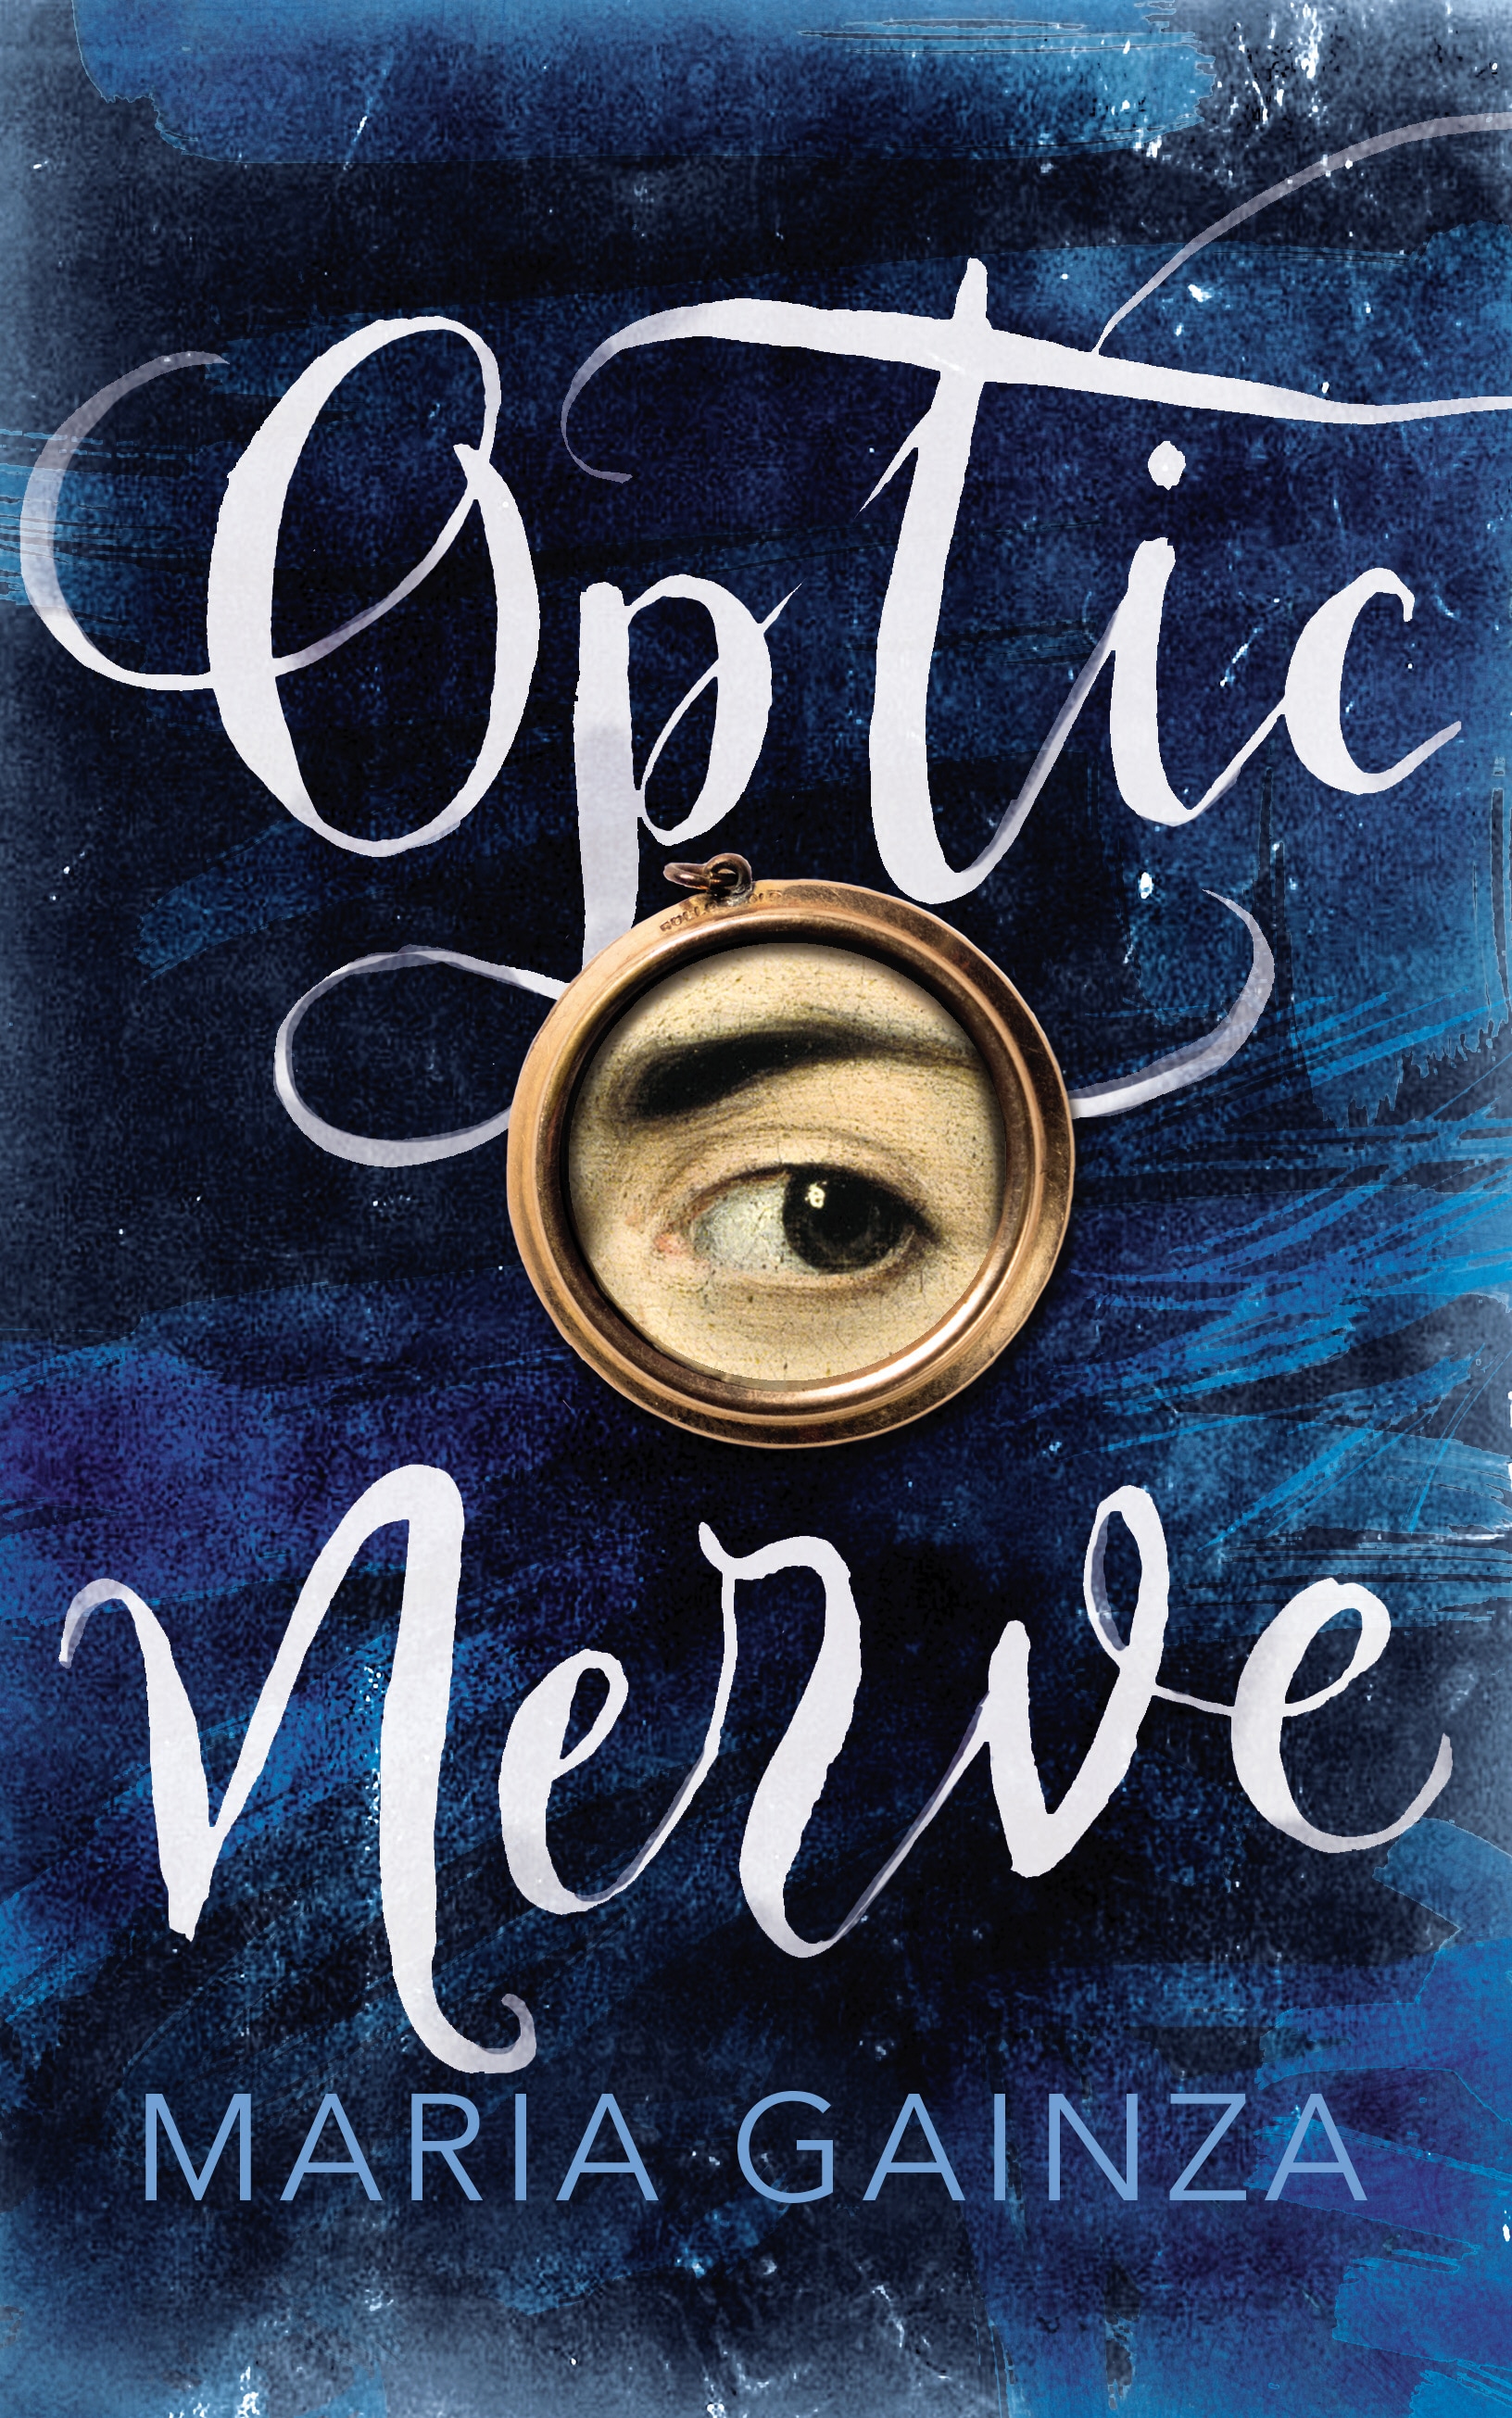 Book “Optic Nerve” by Maria Gainza — January 31, 2019